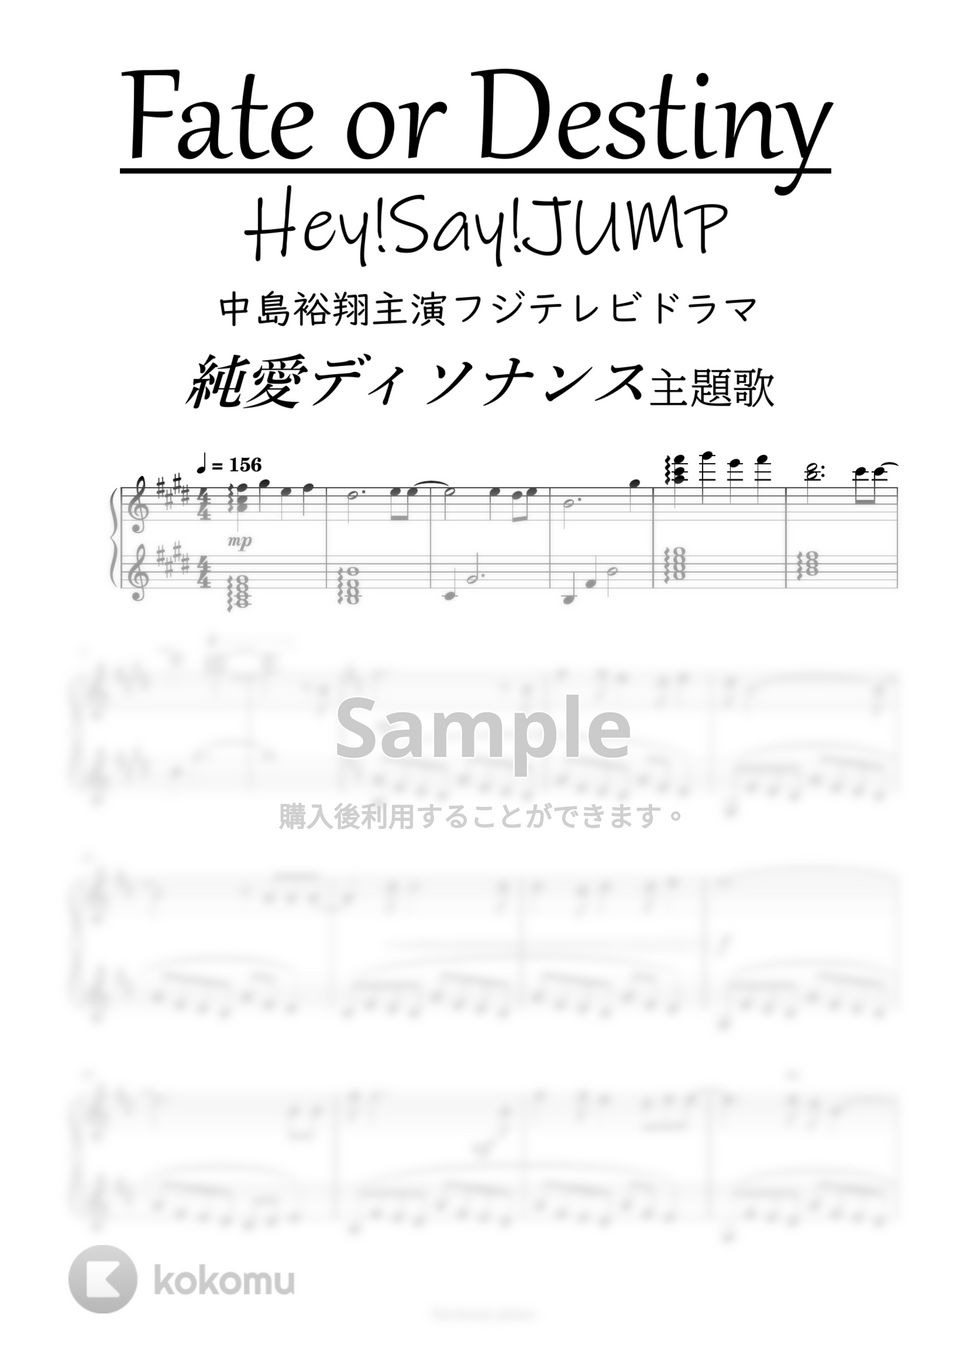 Hey!Say!JUMP - Fate or Destiny by harmony piano